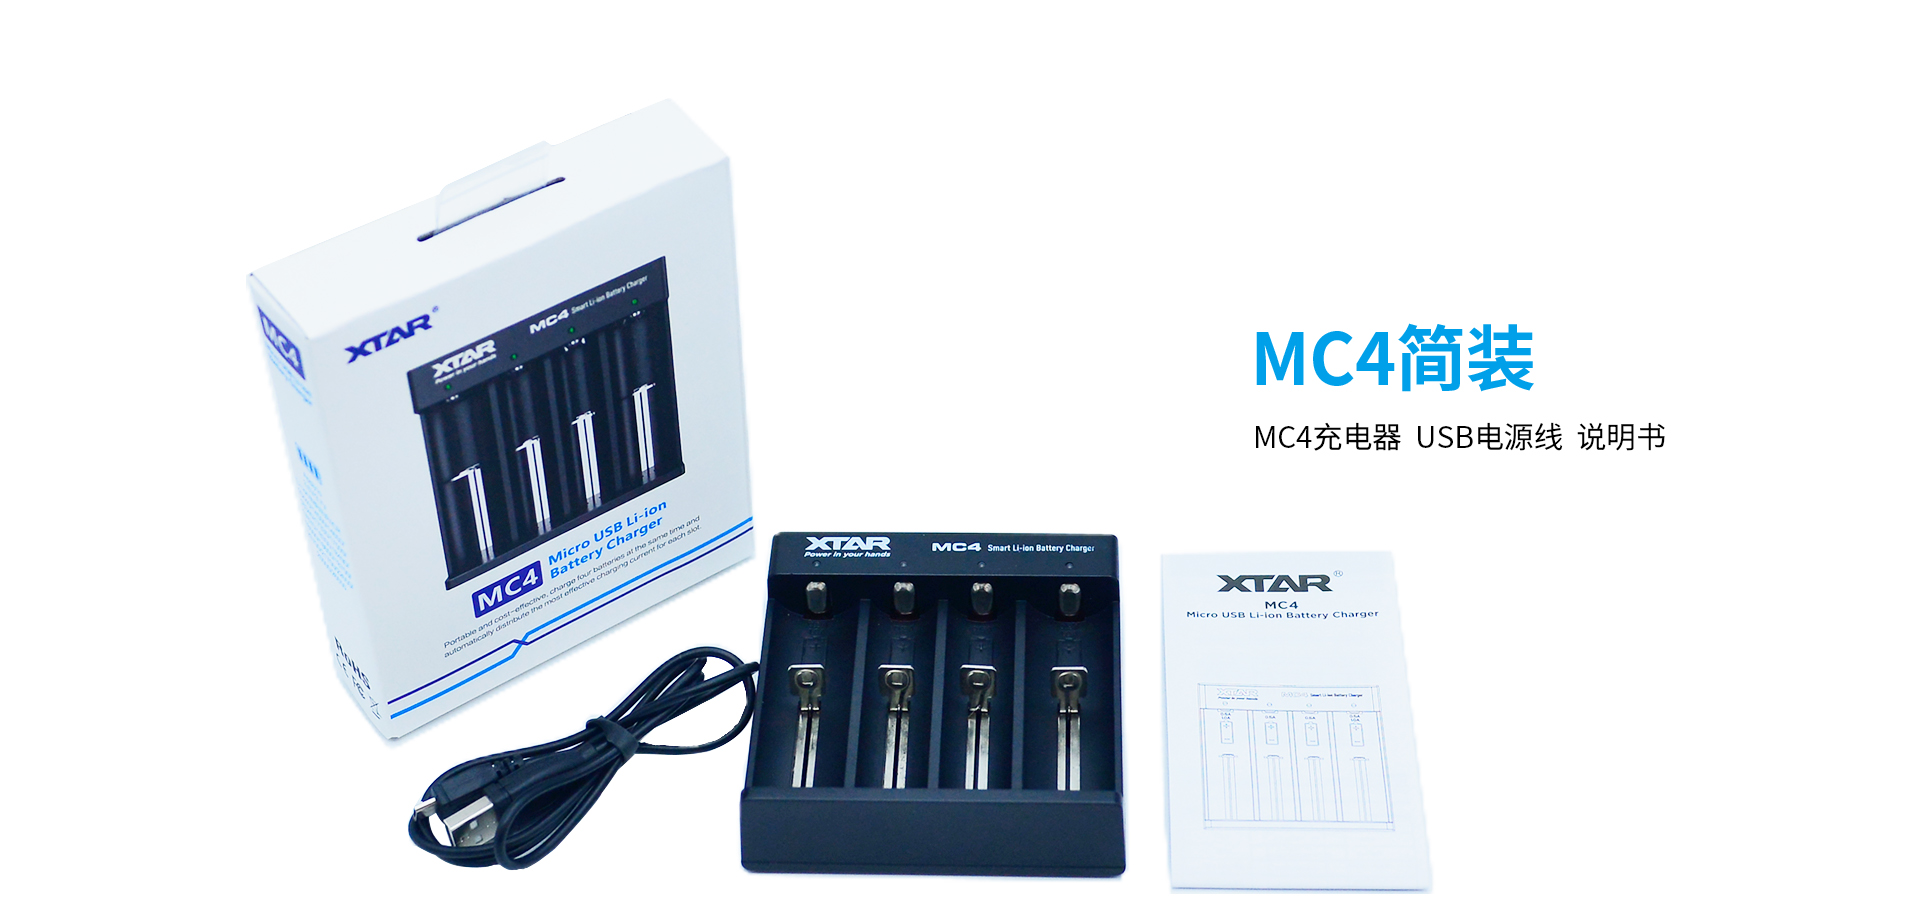 XTAR MC4智能充电器